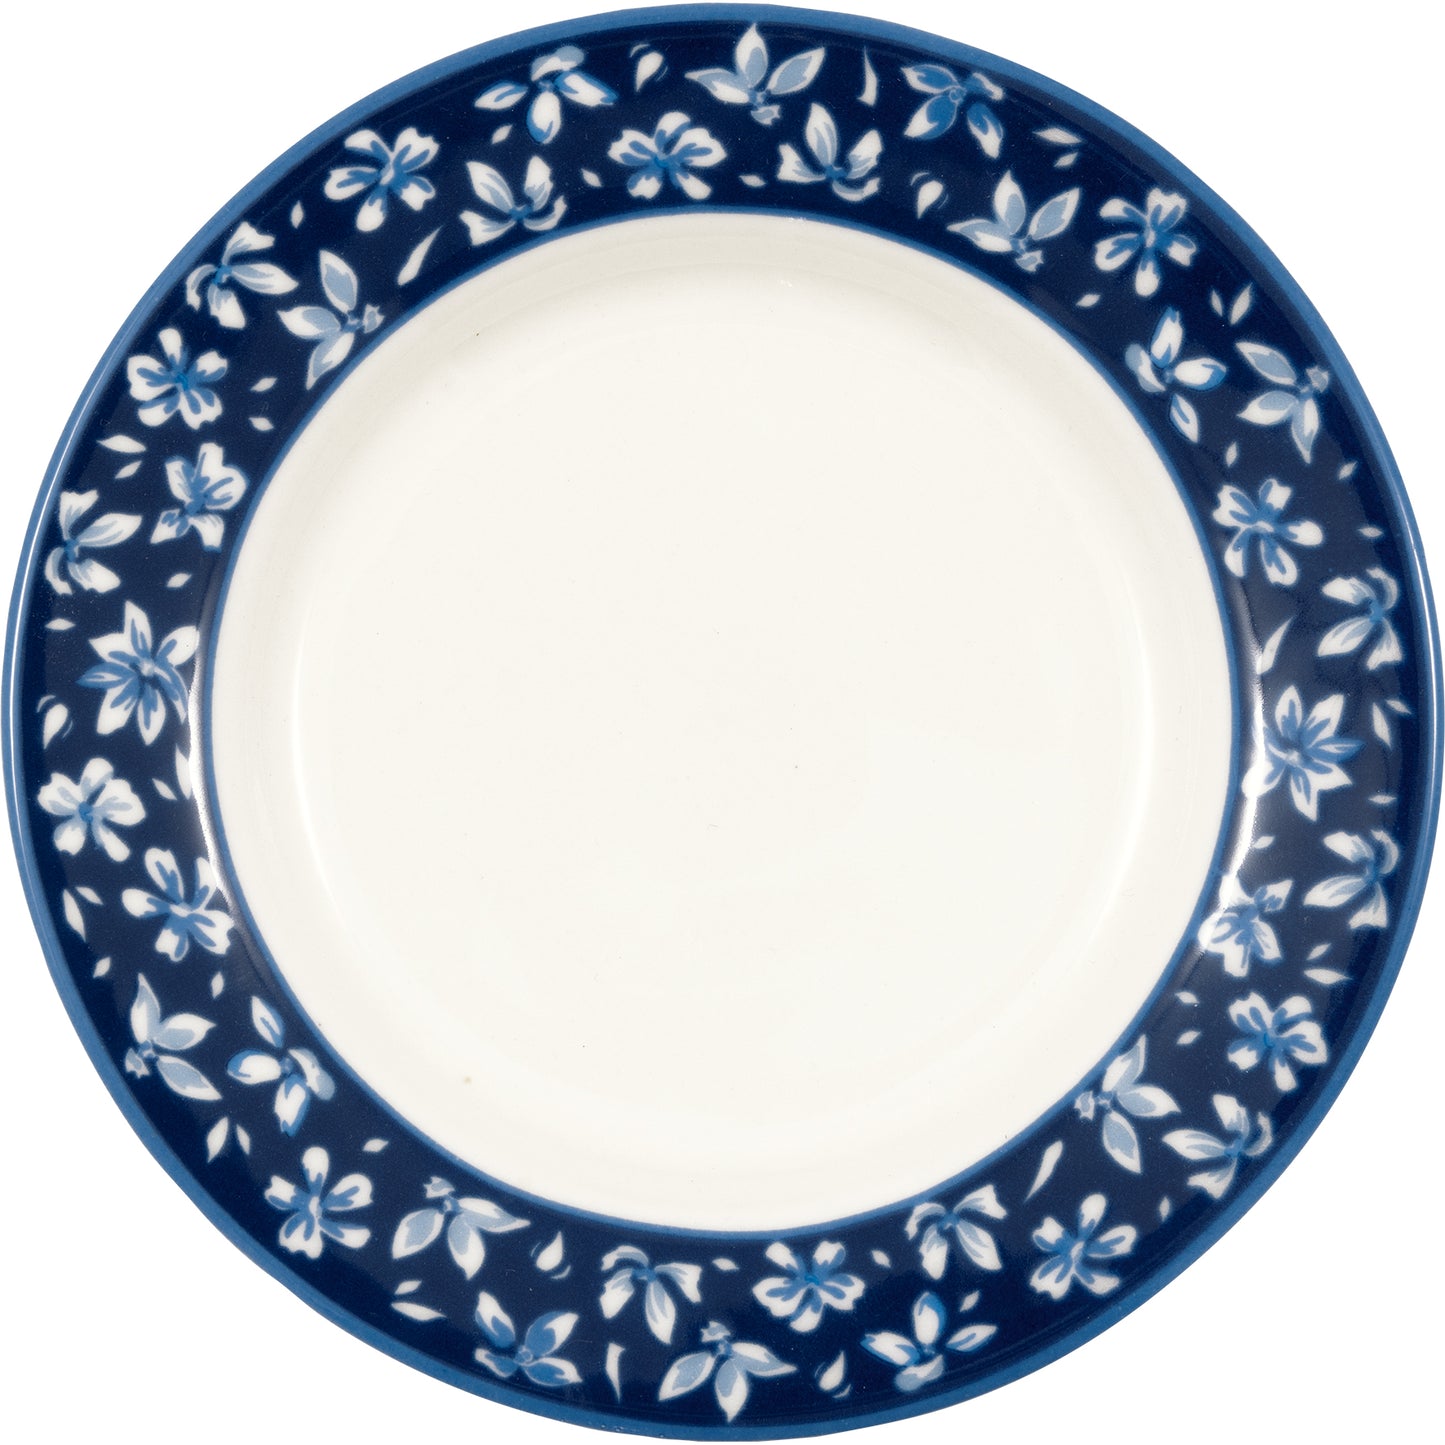 Small plate Dahla blue